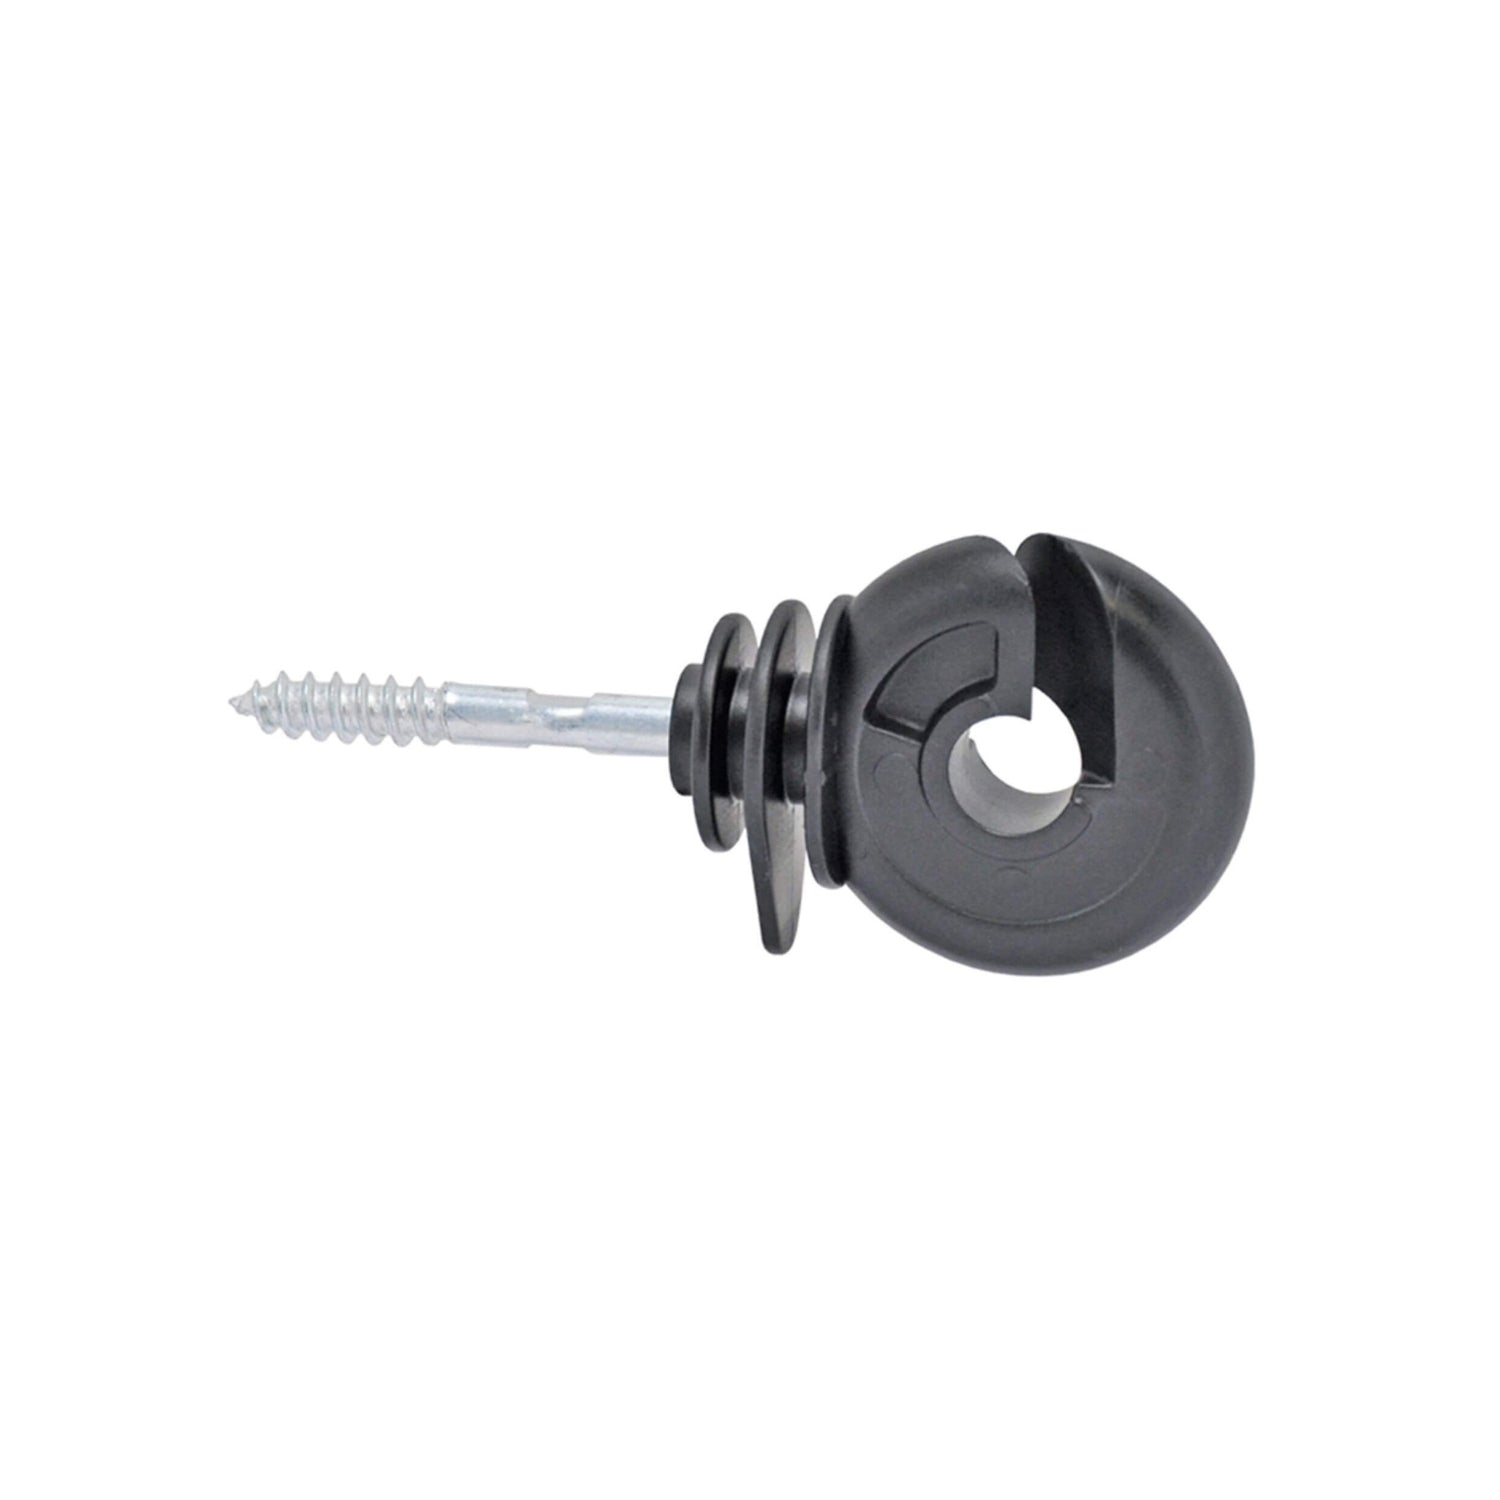 Ring insulator with screw, 25 pcs